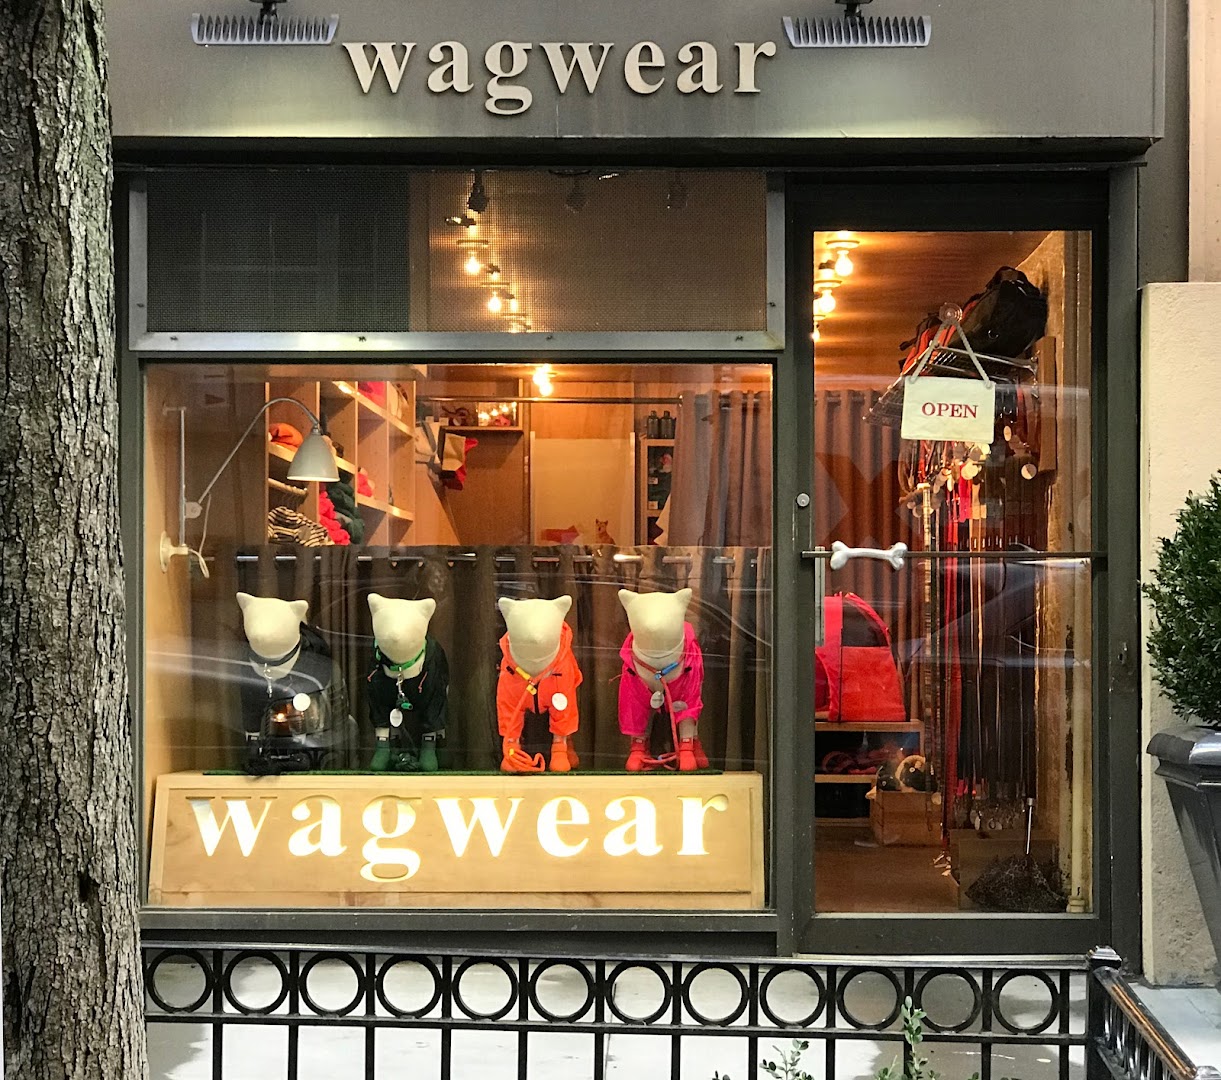 Wagwear